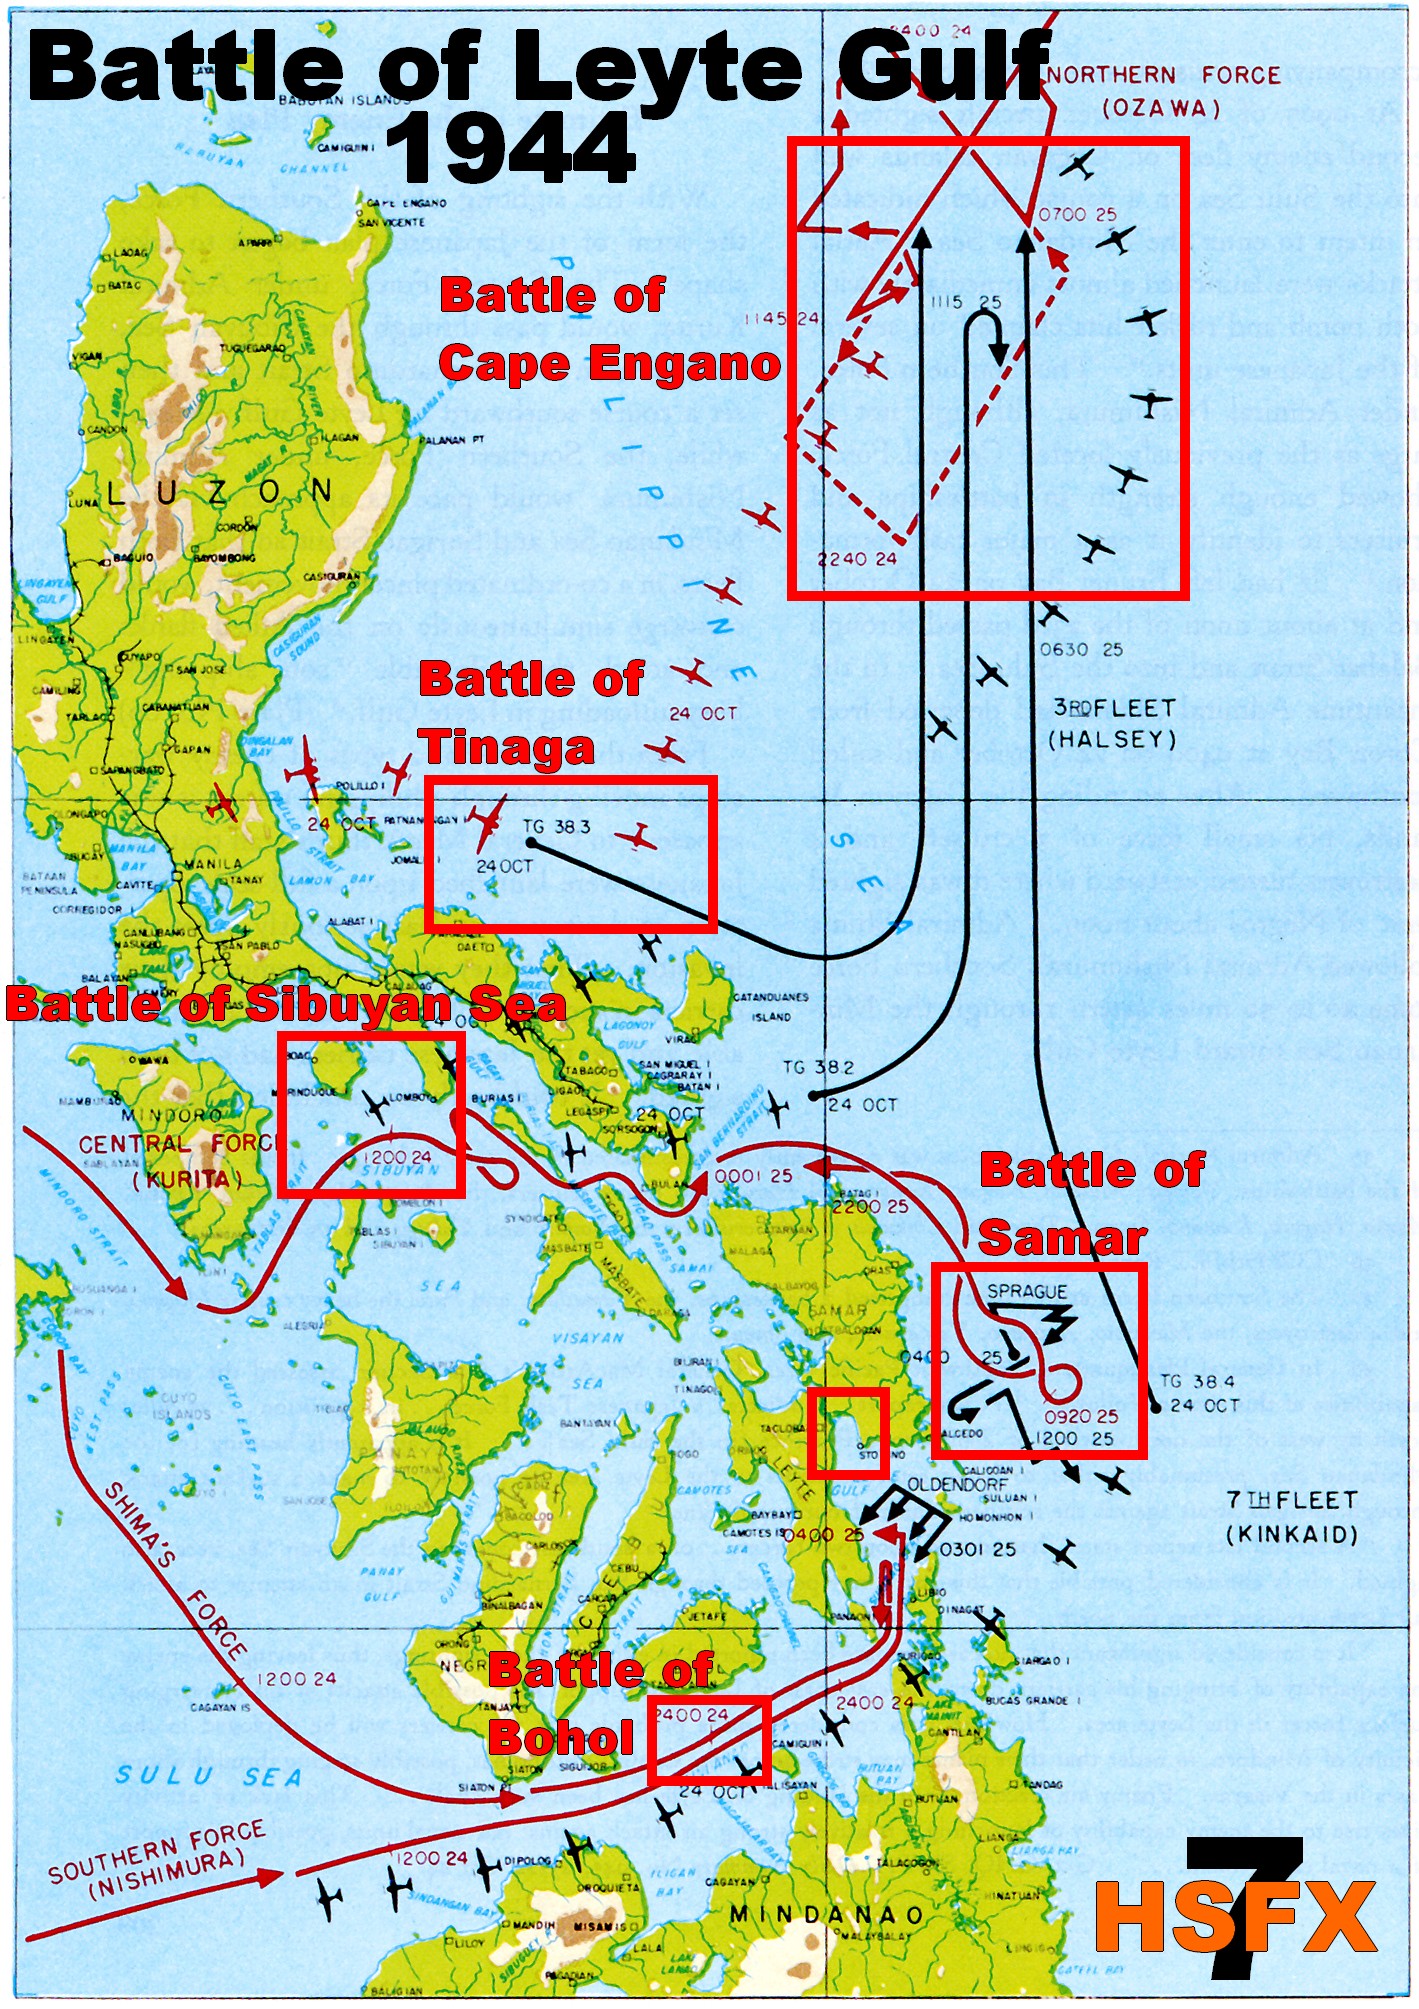 Battle of Leyte Gulf (HSFX)